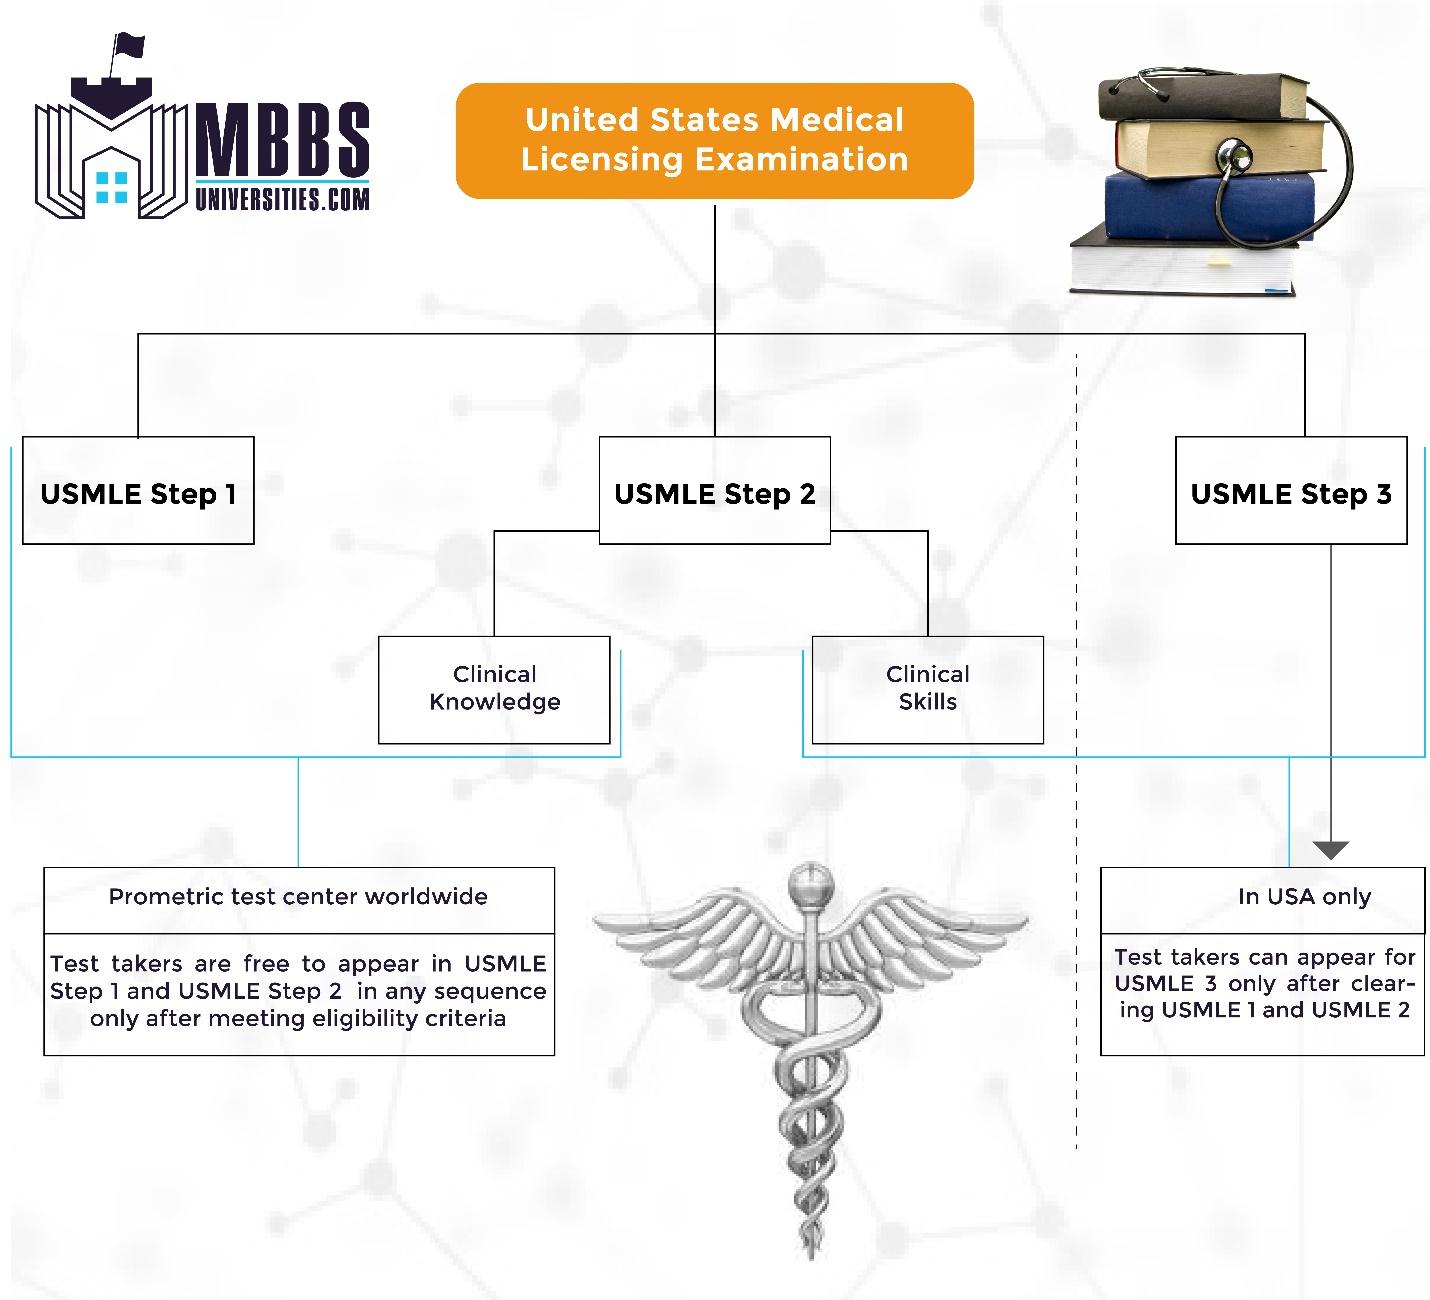 United States Medical Licensing Examination (USMLE)